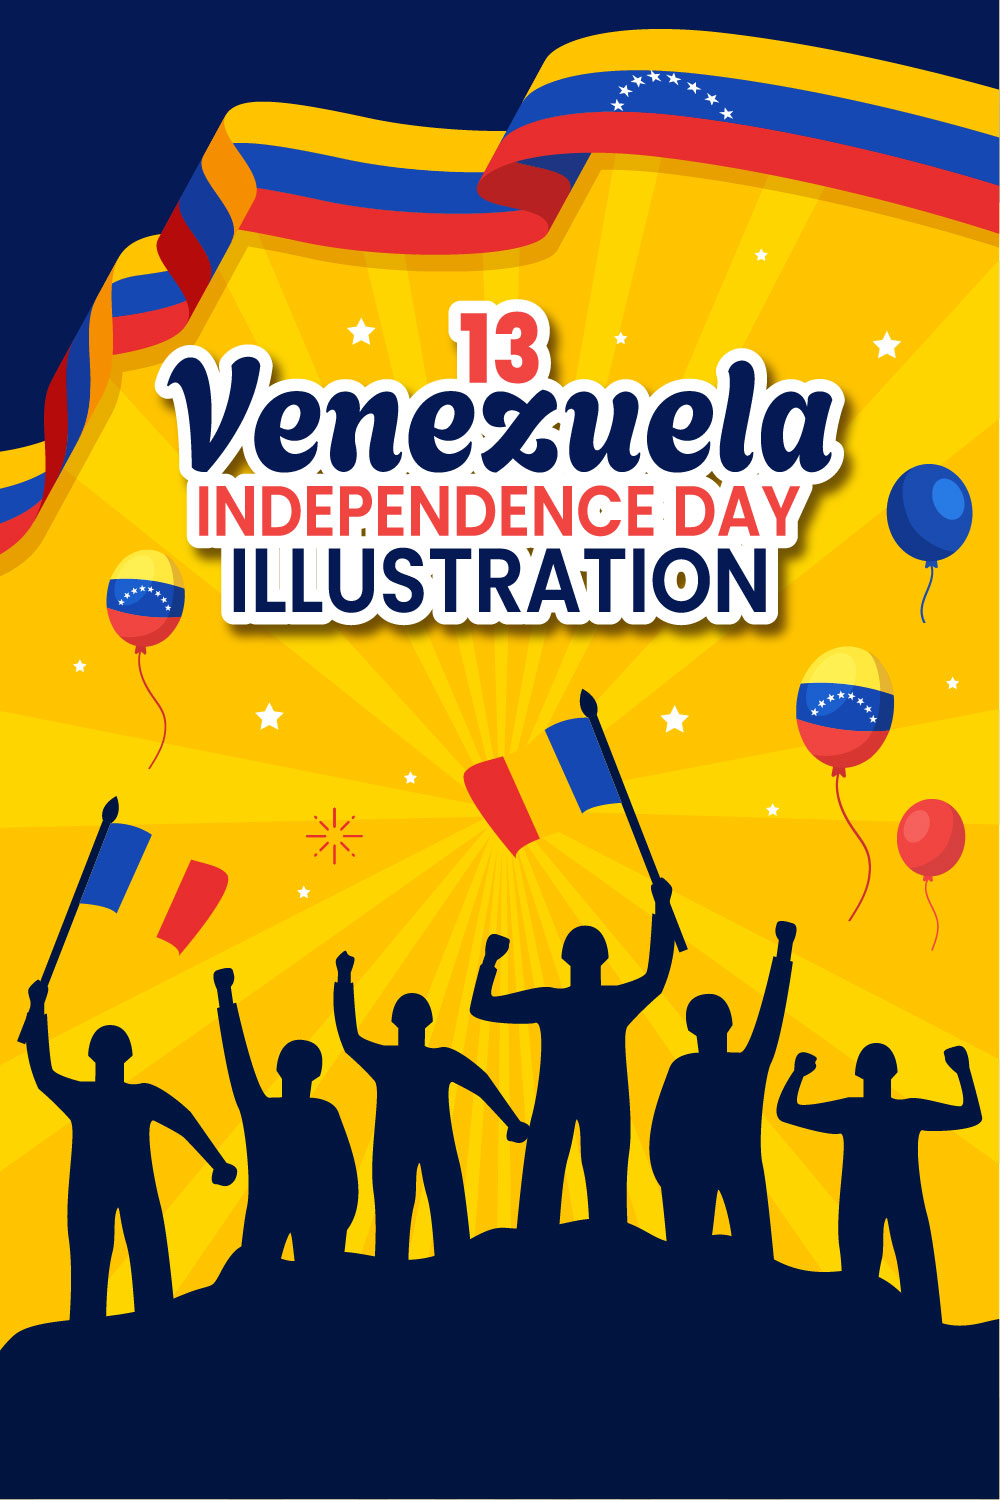 13 Venezuela Independence Day Illustration pinterest preview image.